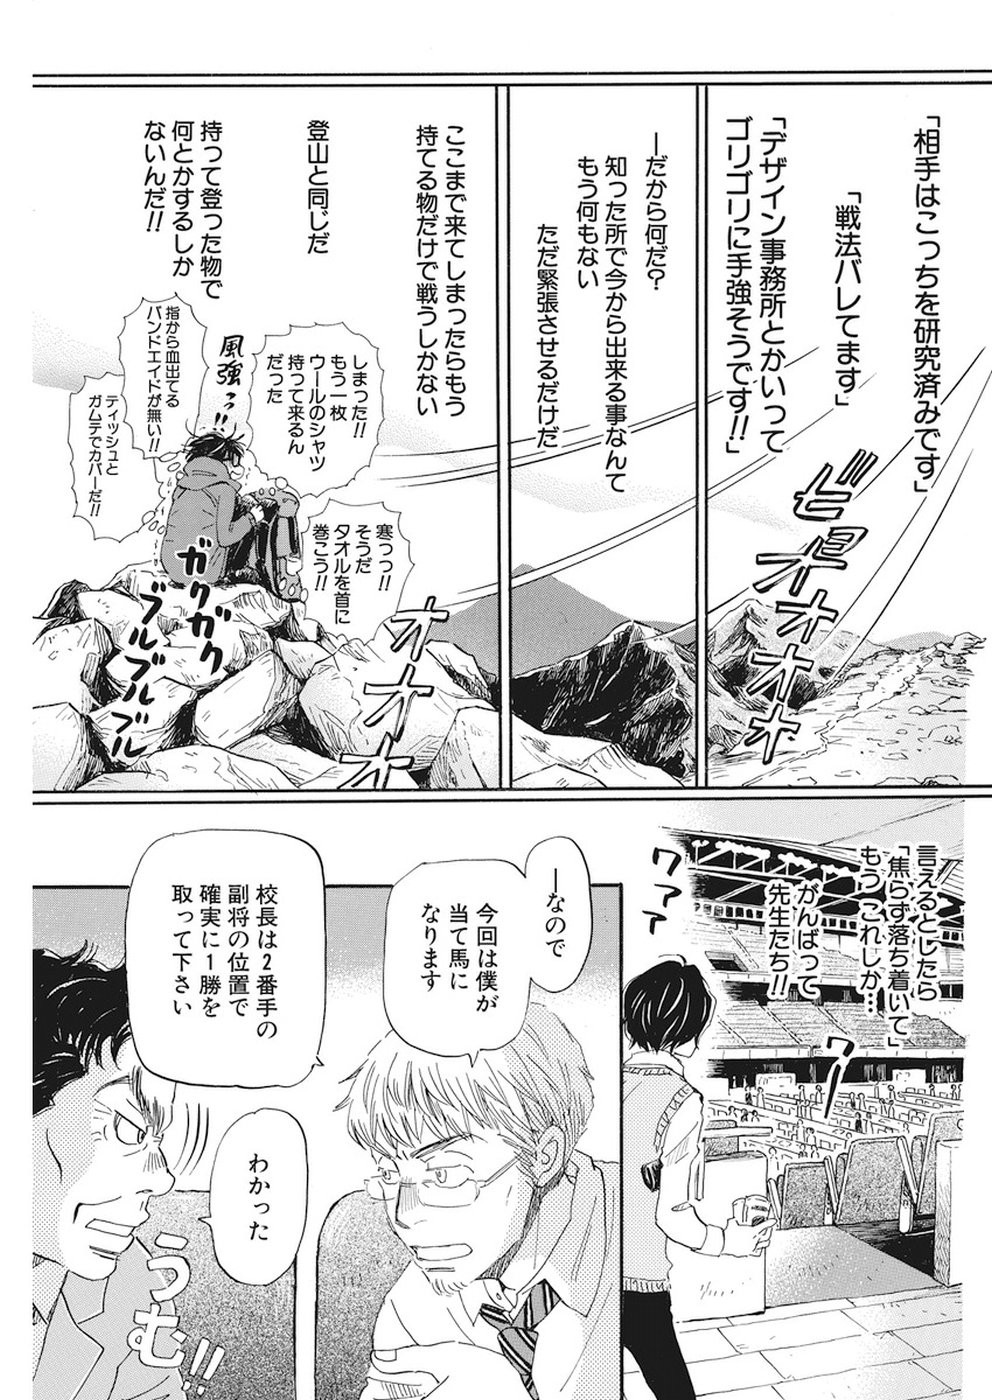 3 Gatsu no Lion - Chapter 150 - Page 9